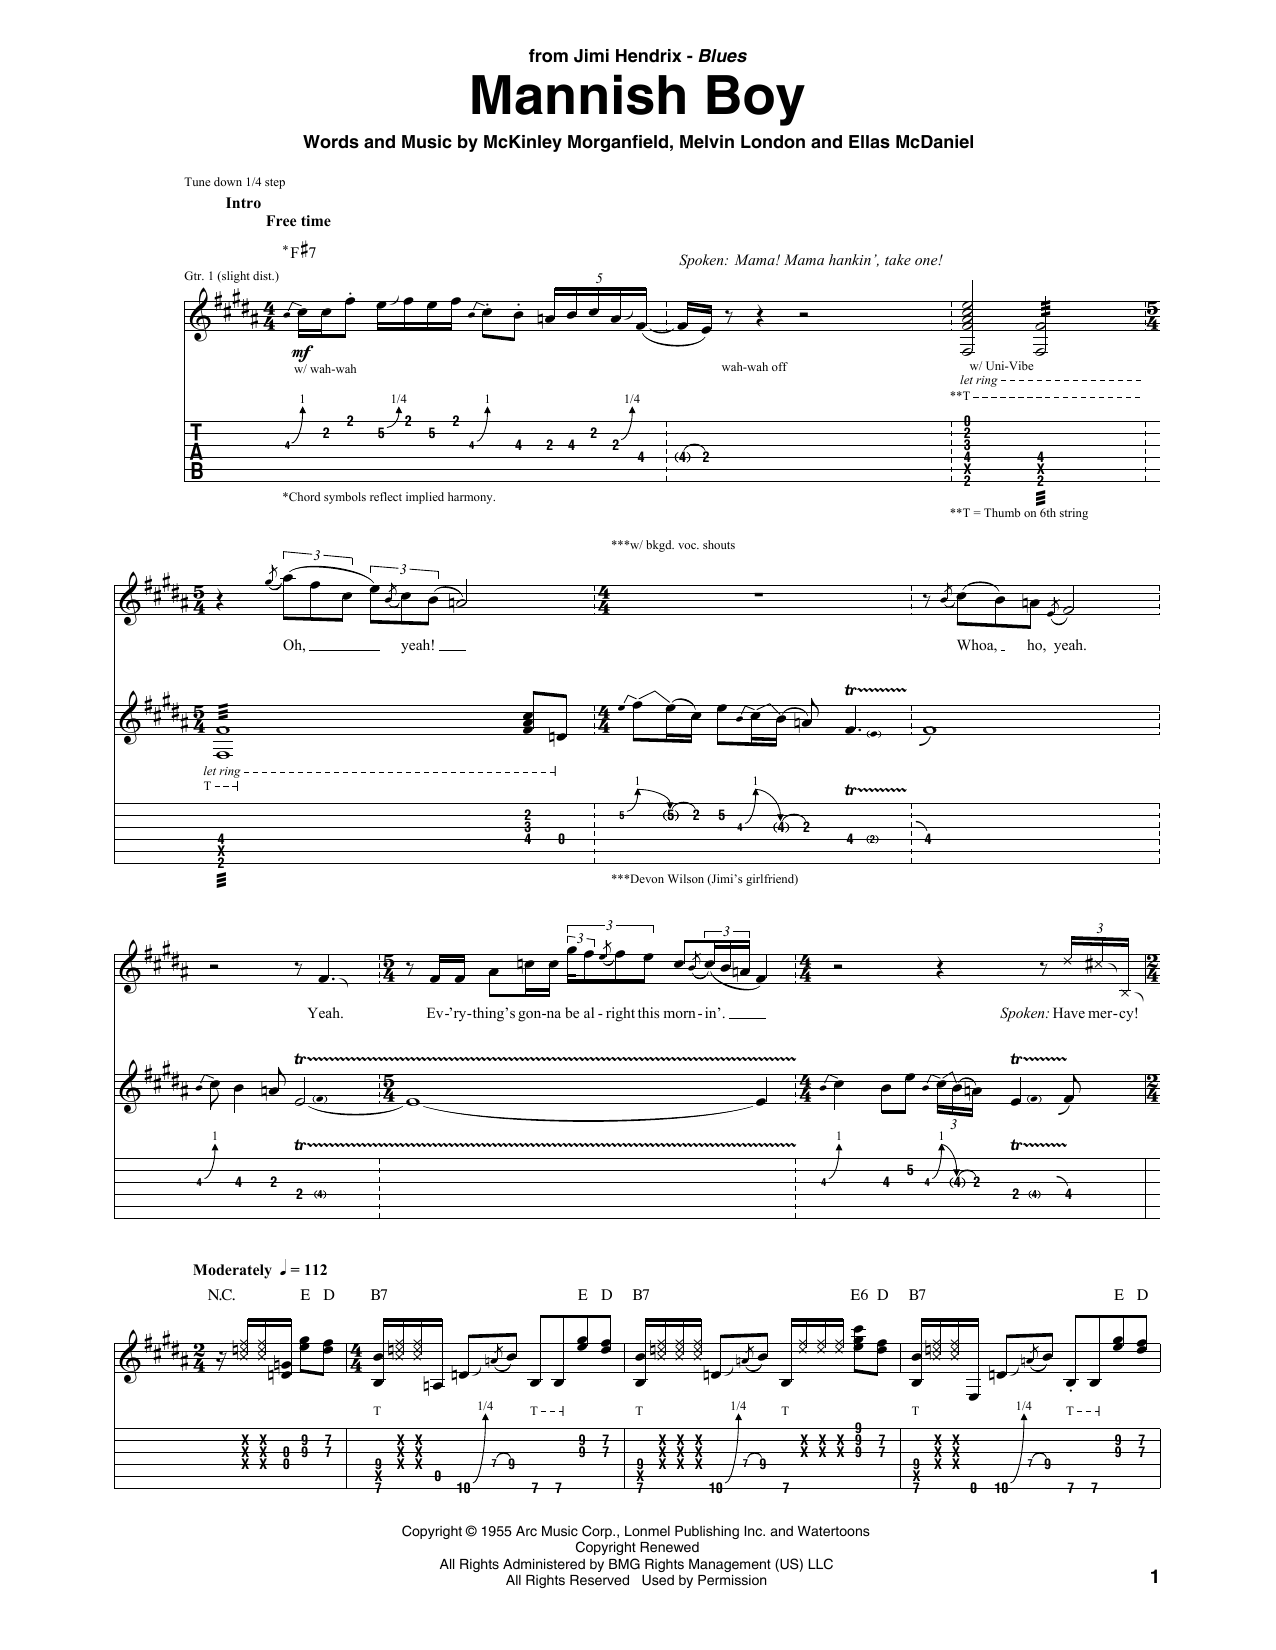 Jimi Hendrix Mannish Boy Sheet Music Notes & Chords for Guitar Tab - Download or Print PDF